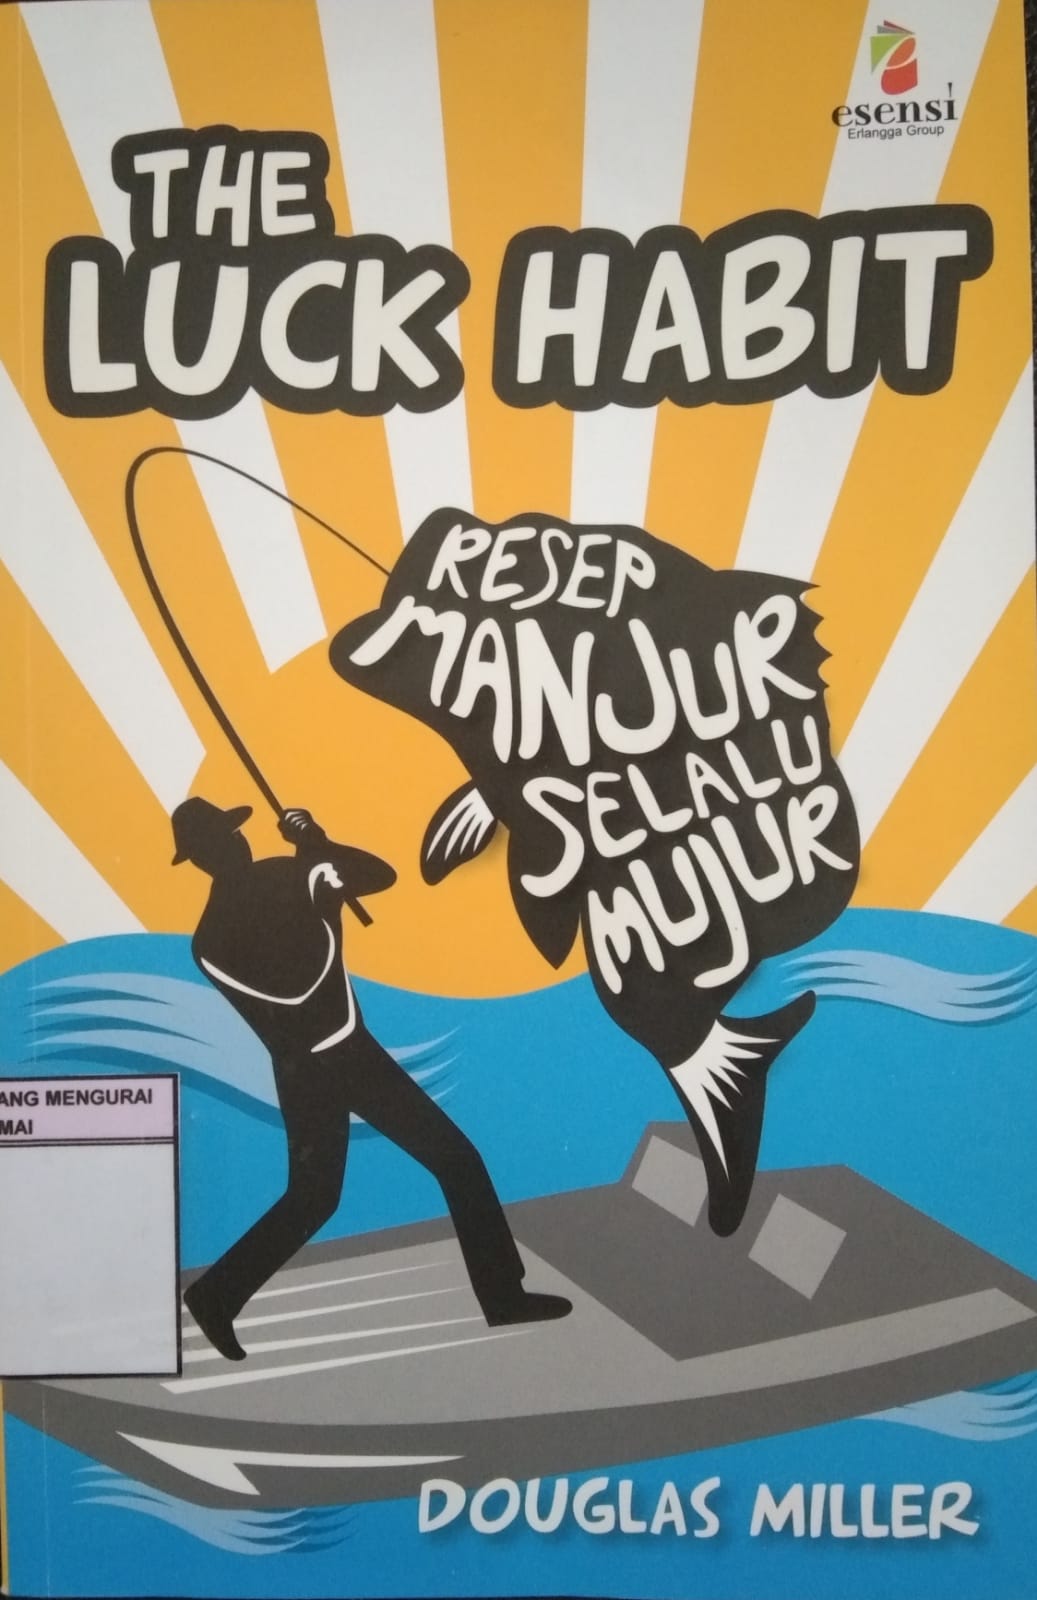 The Luck Habit : Resep Manjur Selalu Mujur